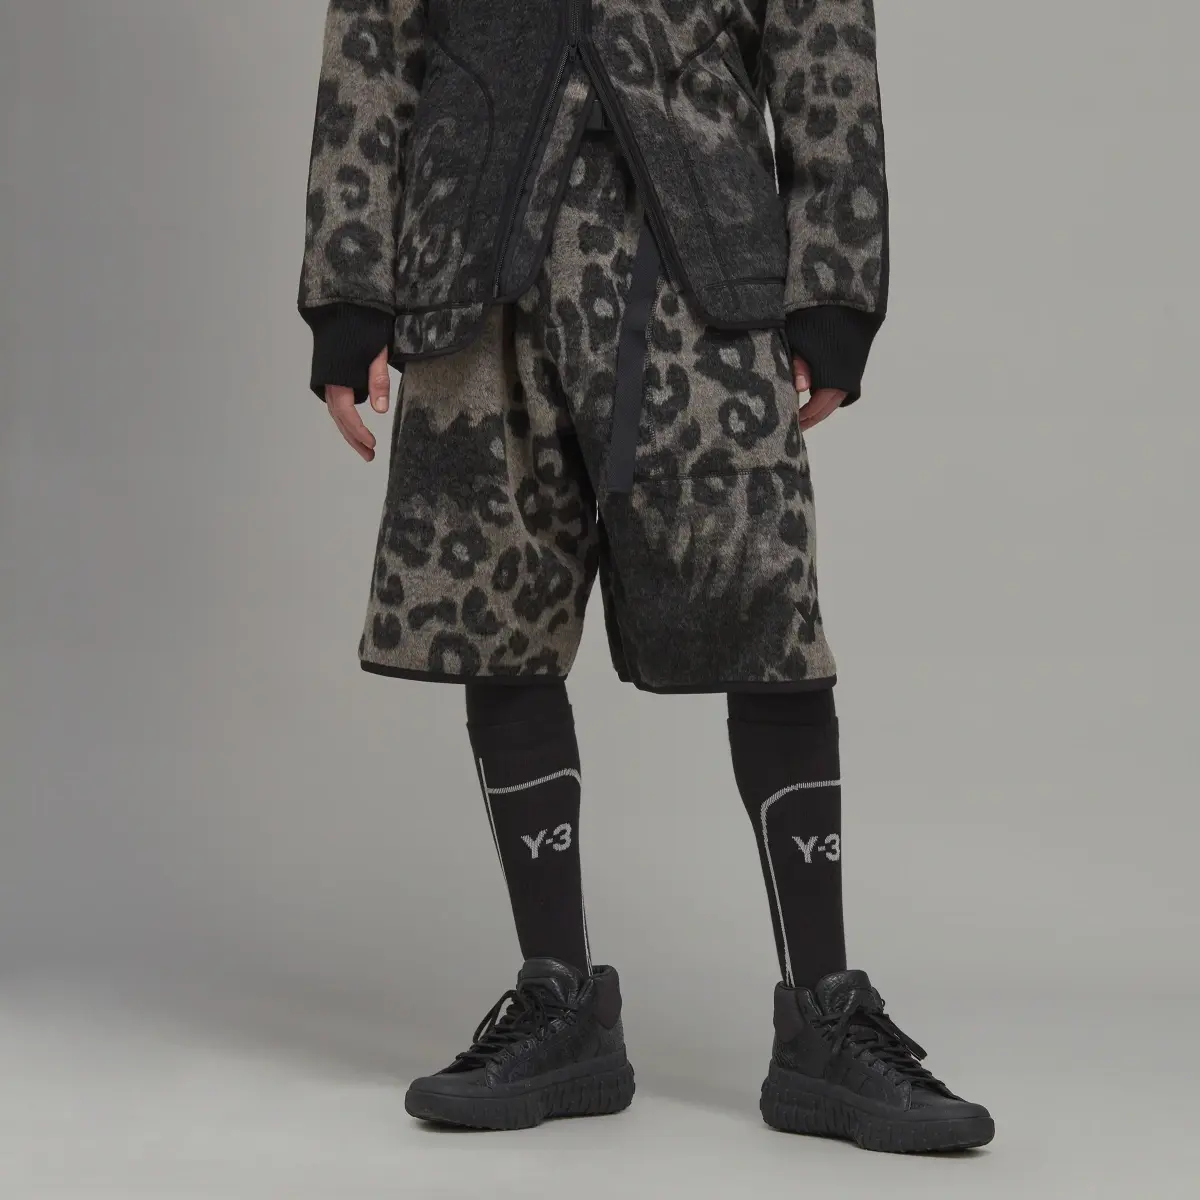 Adidas Shorts Fleece Soccer Y-3. 1